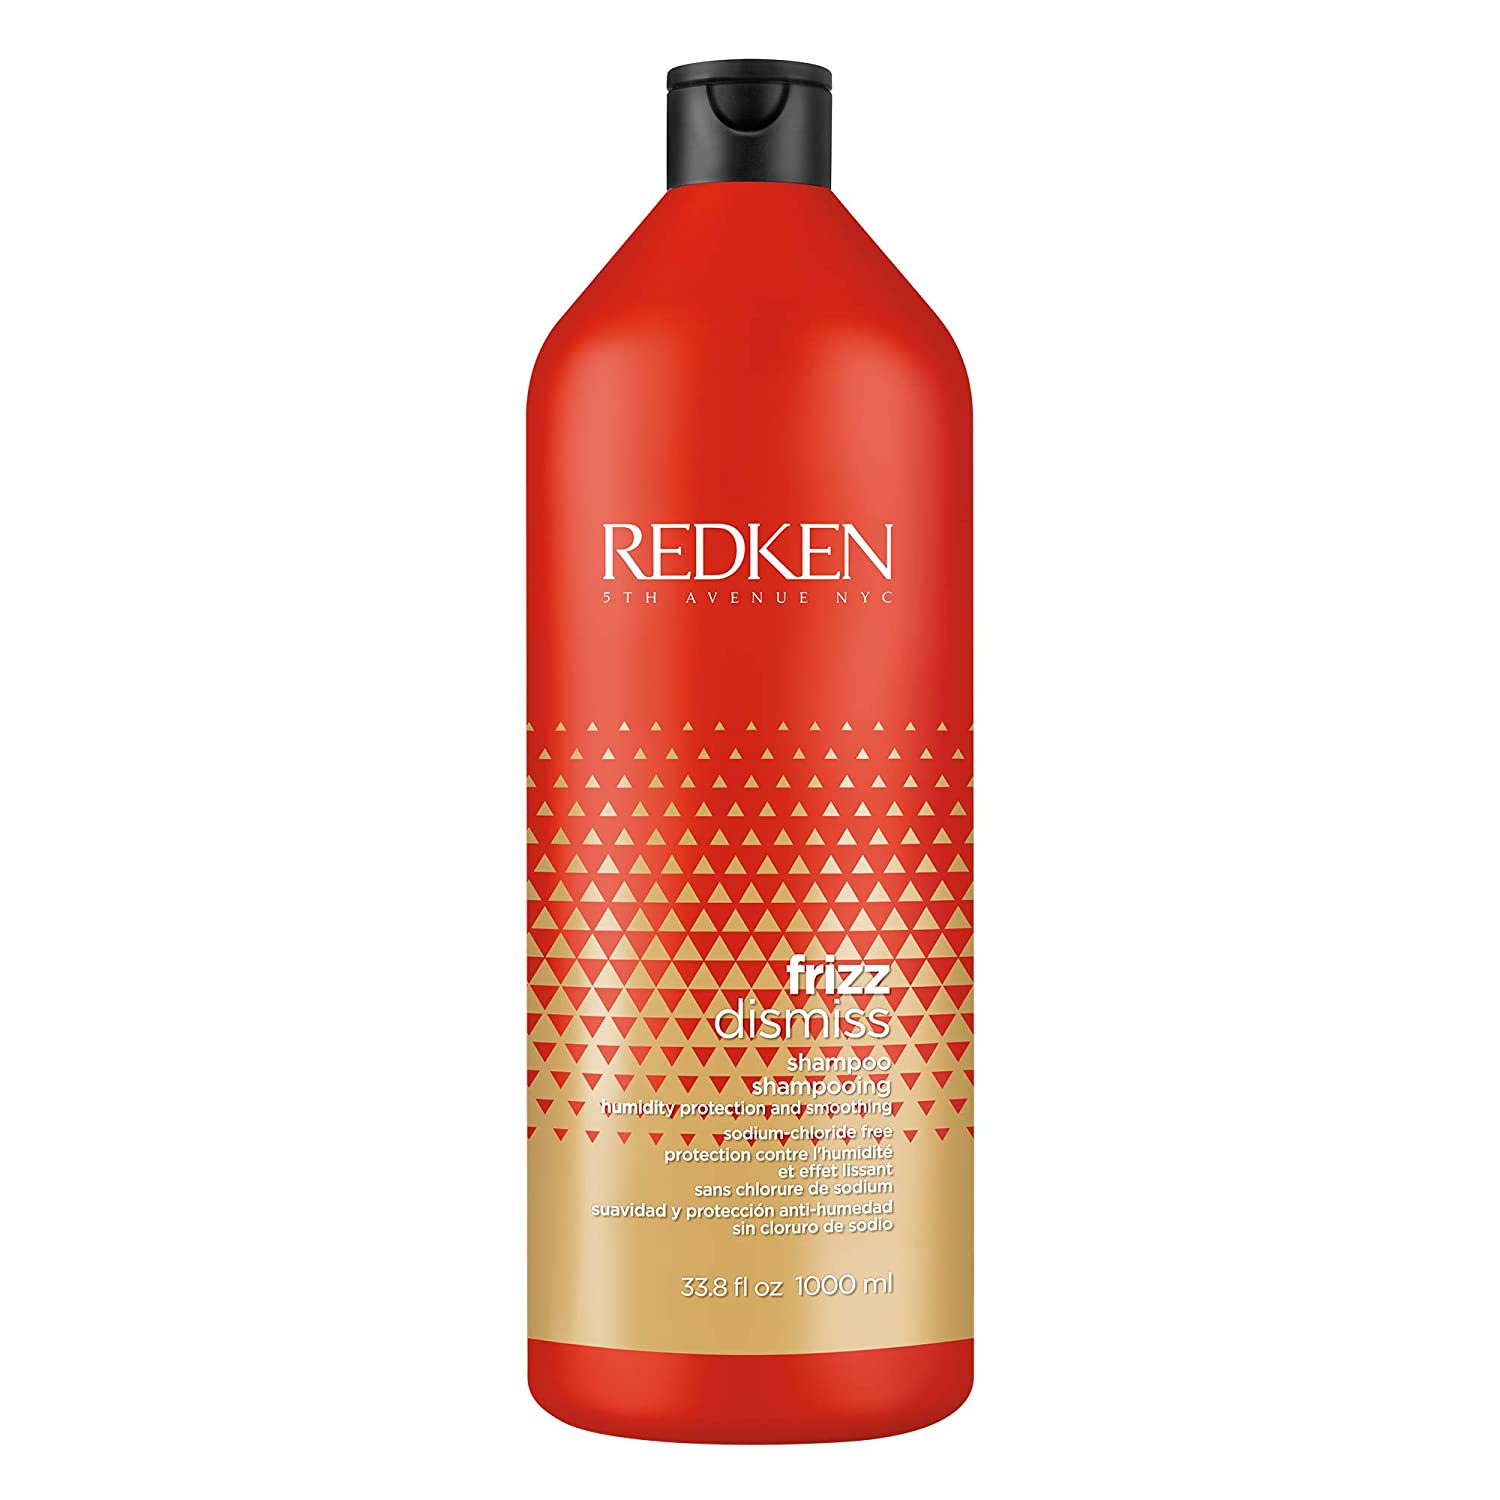 Redken - Frizz Dismiss - Shampoo - 1L - by Redken |ProCare Outlet|